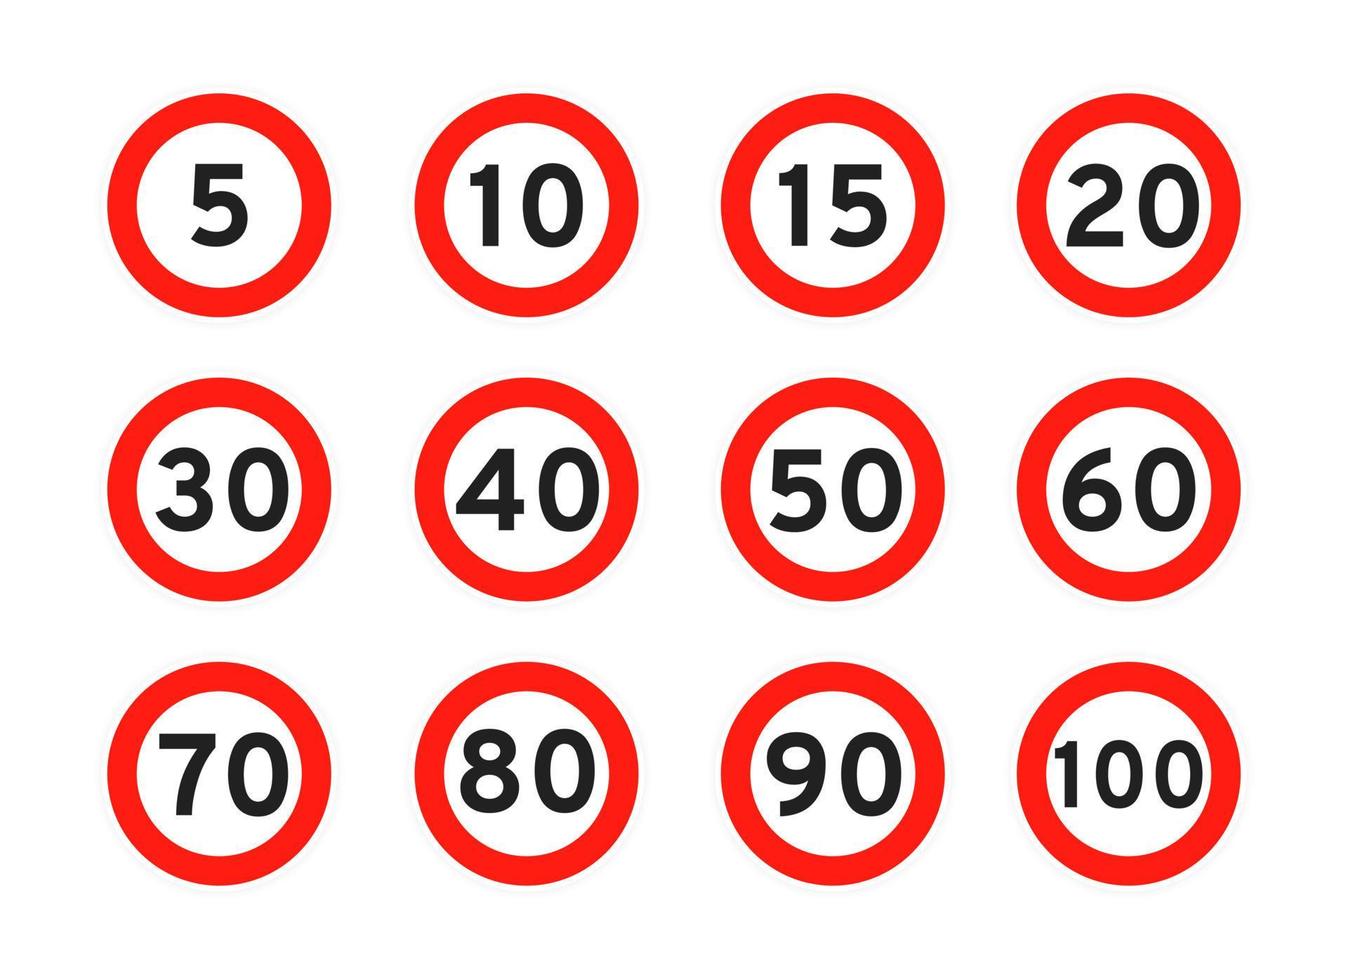 Speed limit 5, 10, 15, 20, 30, 40, 50, 60, 70, 80, 90, 100 round road traffic icon sign flat style design vector illustration set.